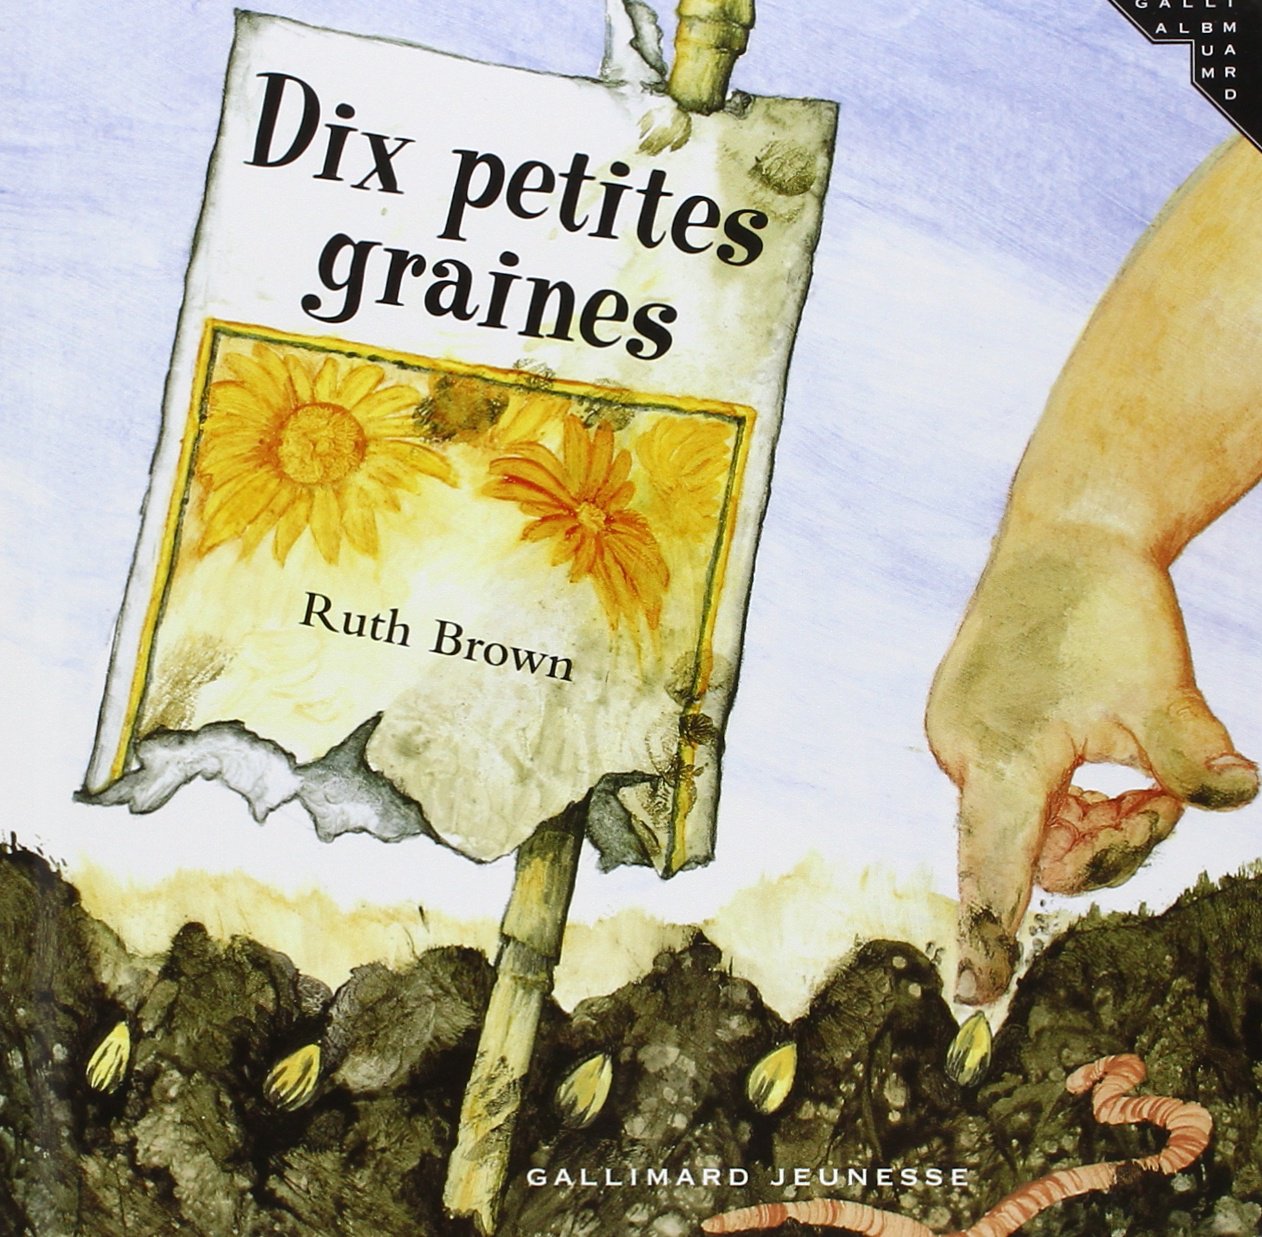 « Dix petites graines » de Ruth Brown